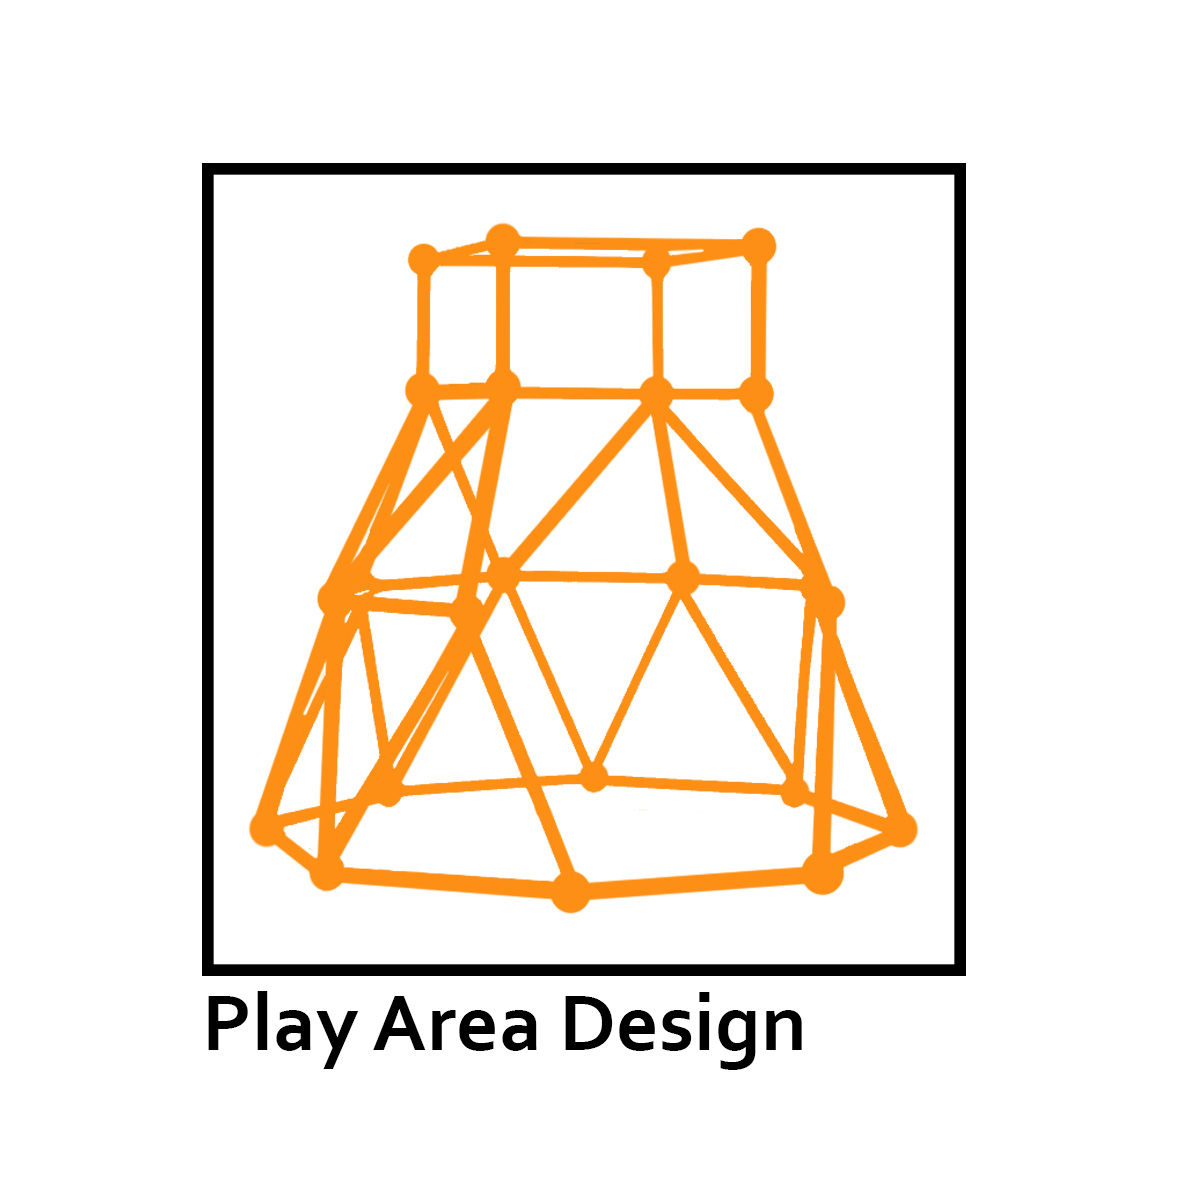 Play Area Design